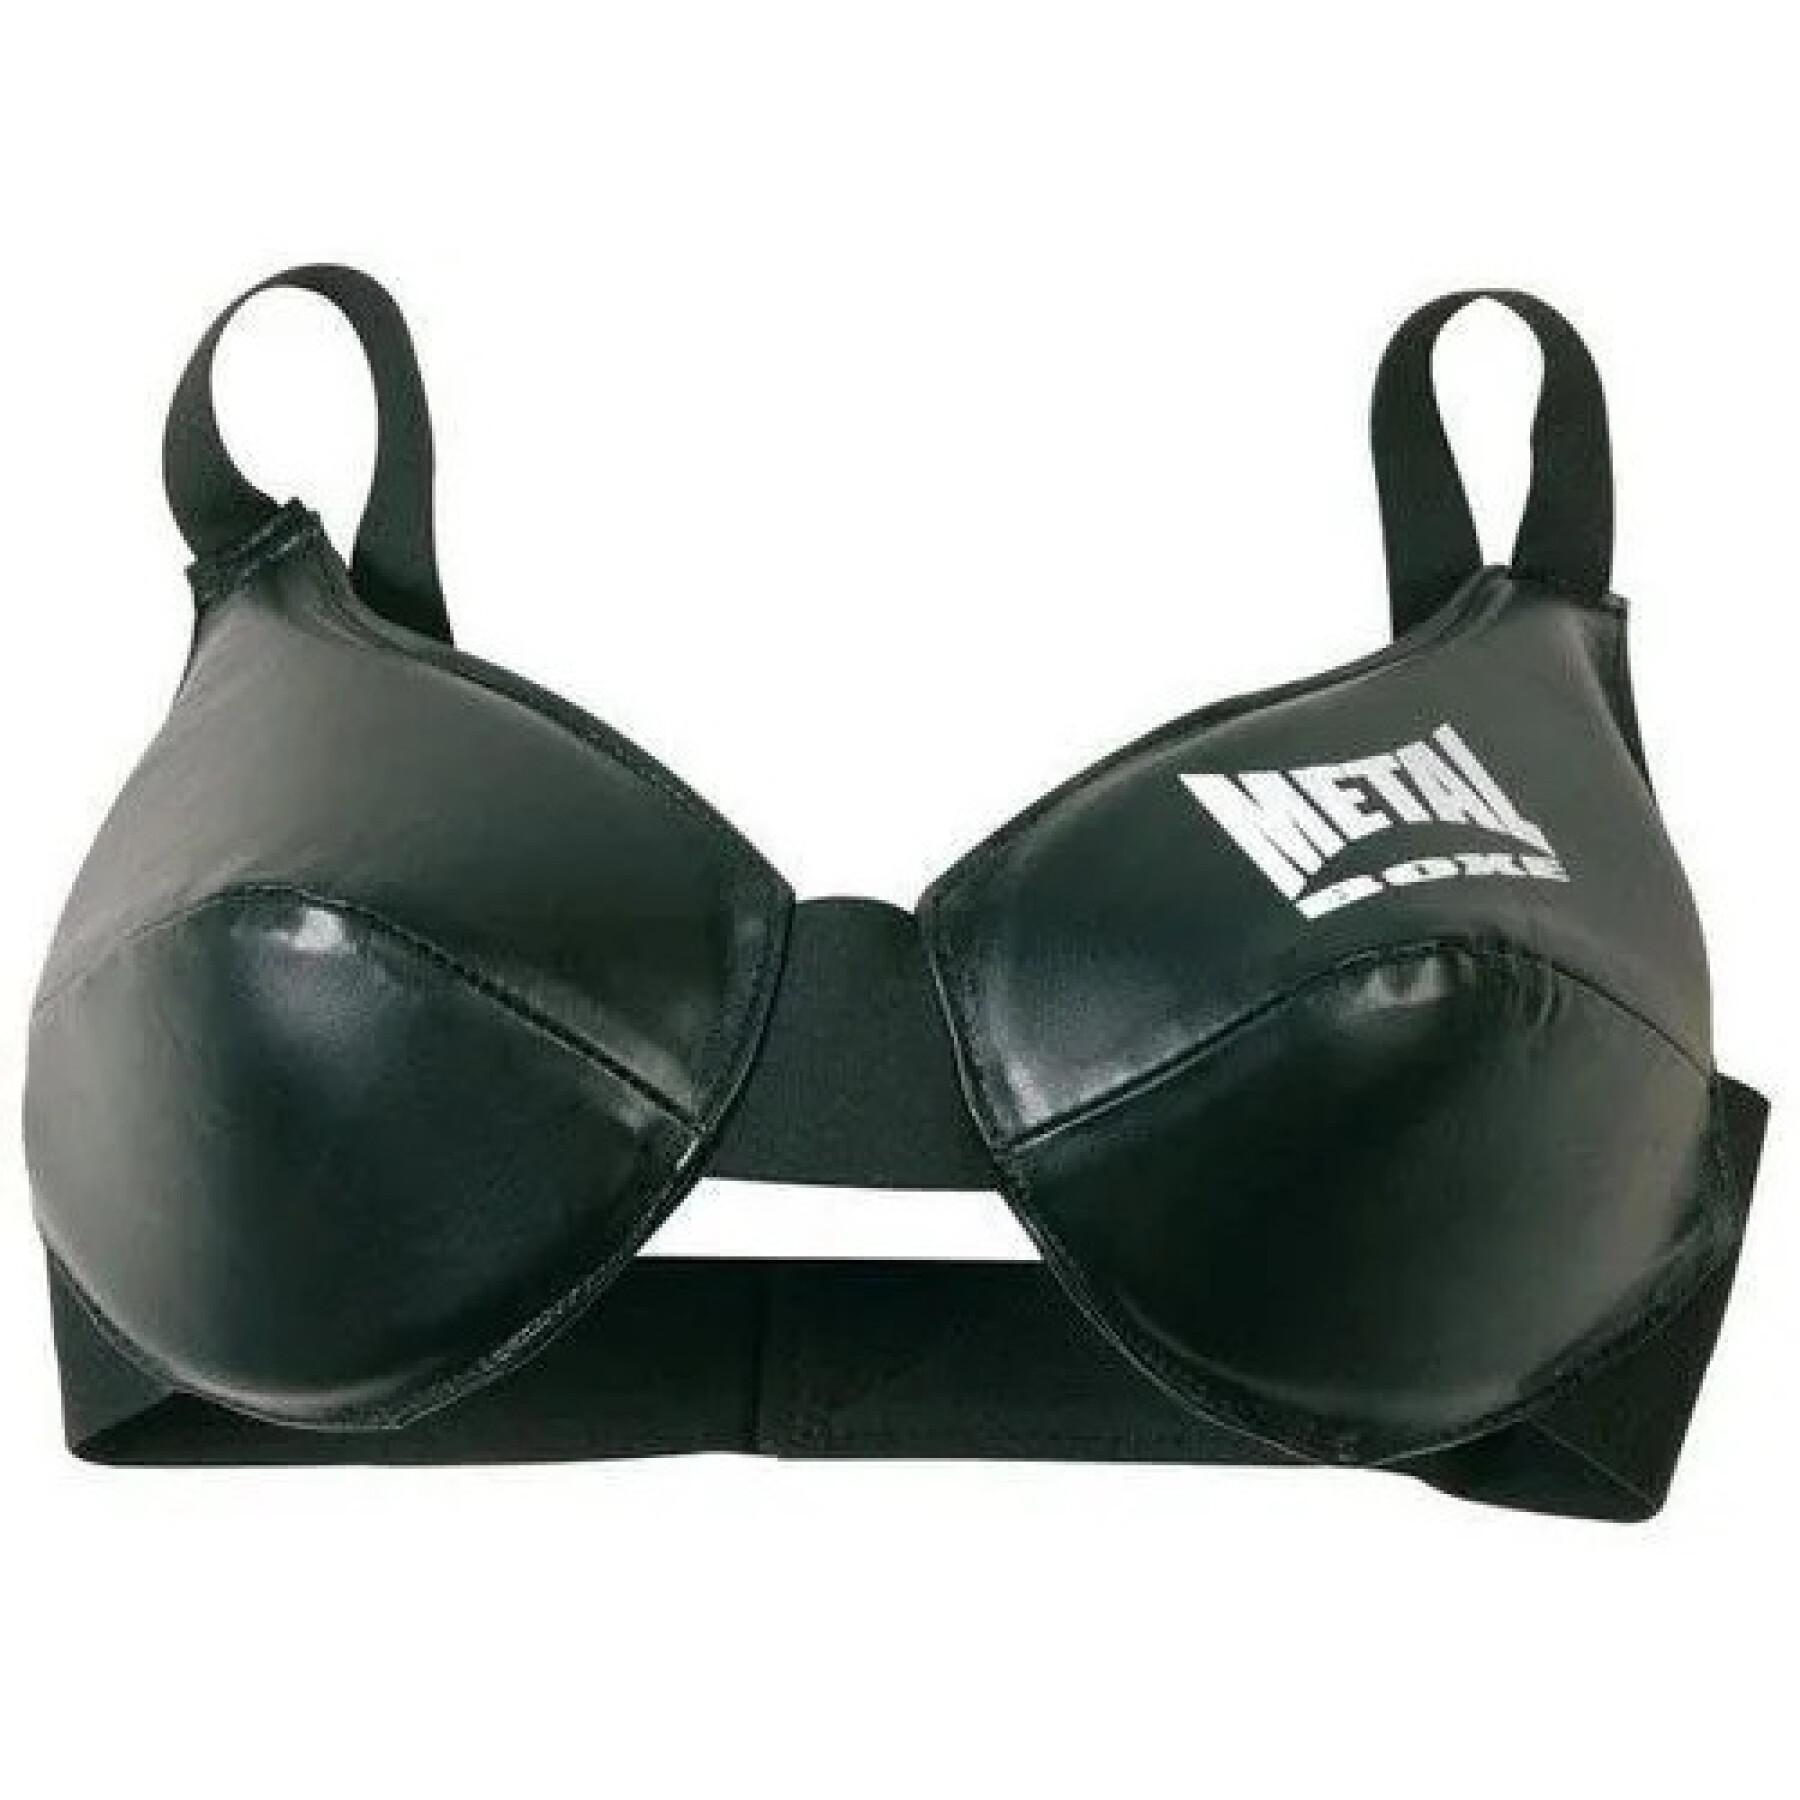 Protection seins femme Metal Boxe - Protection / soin - Équipements